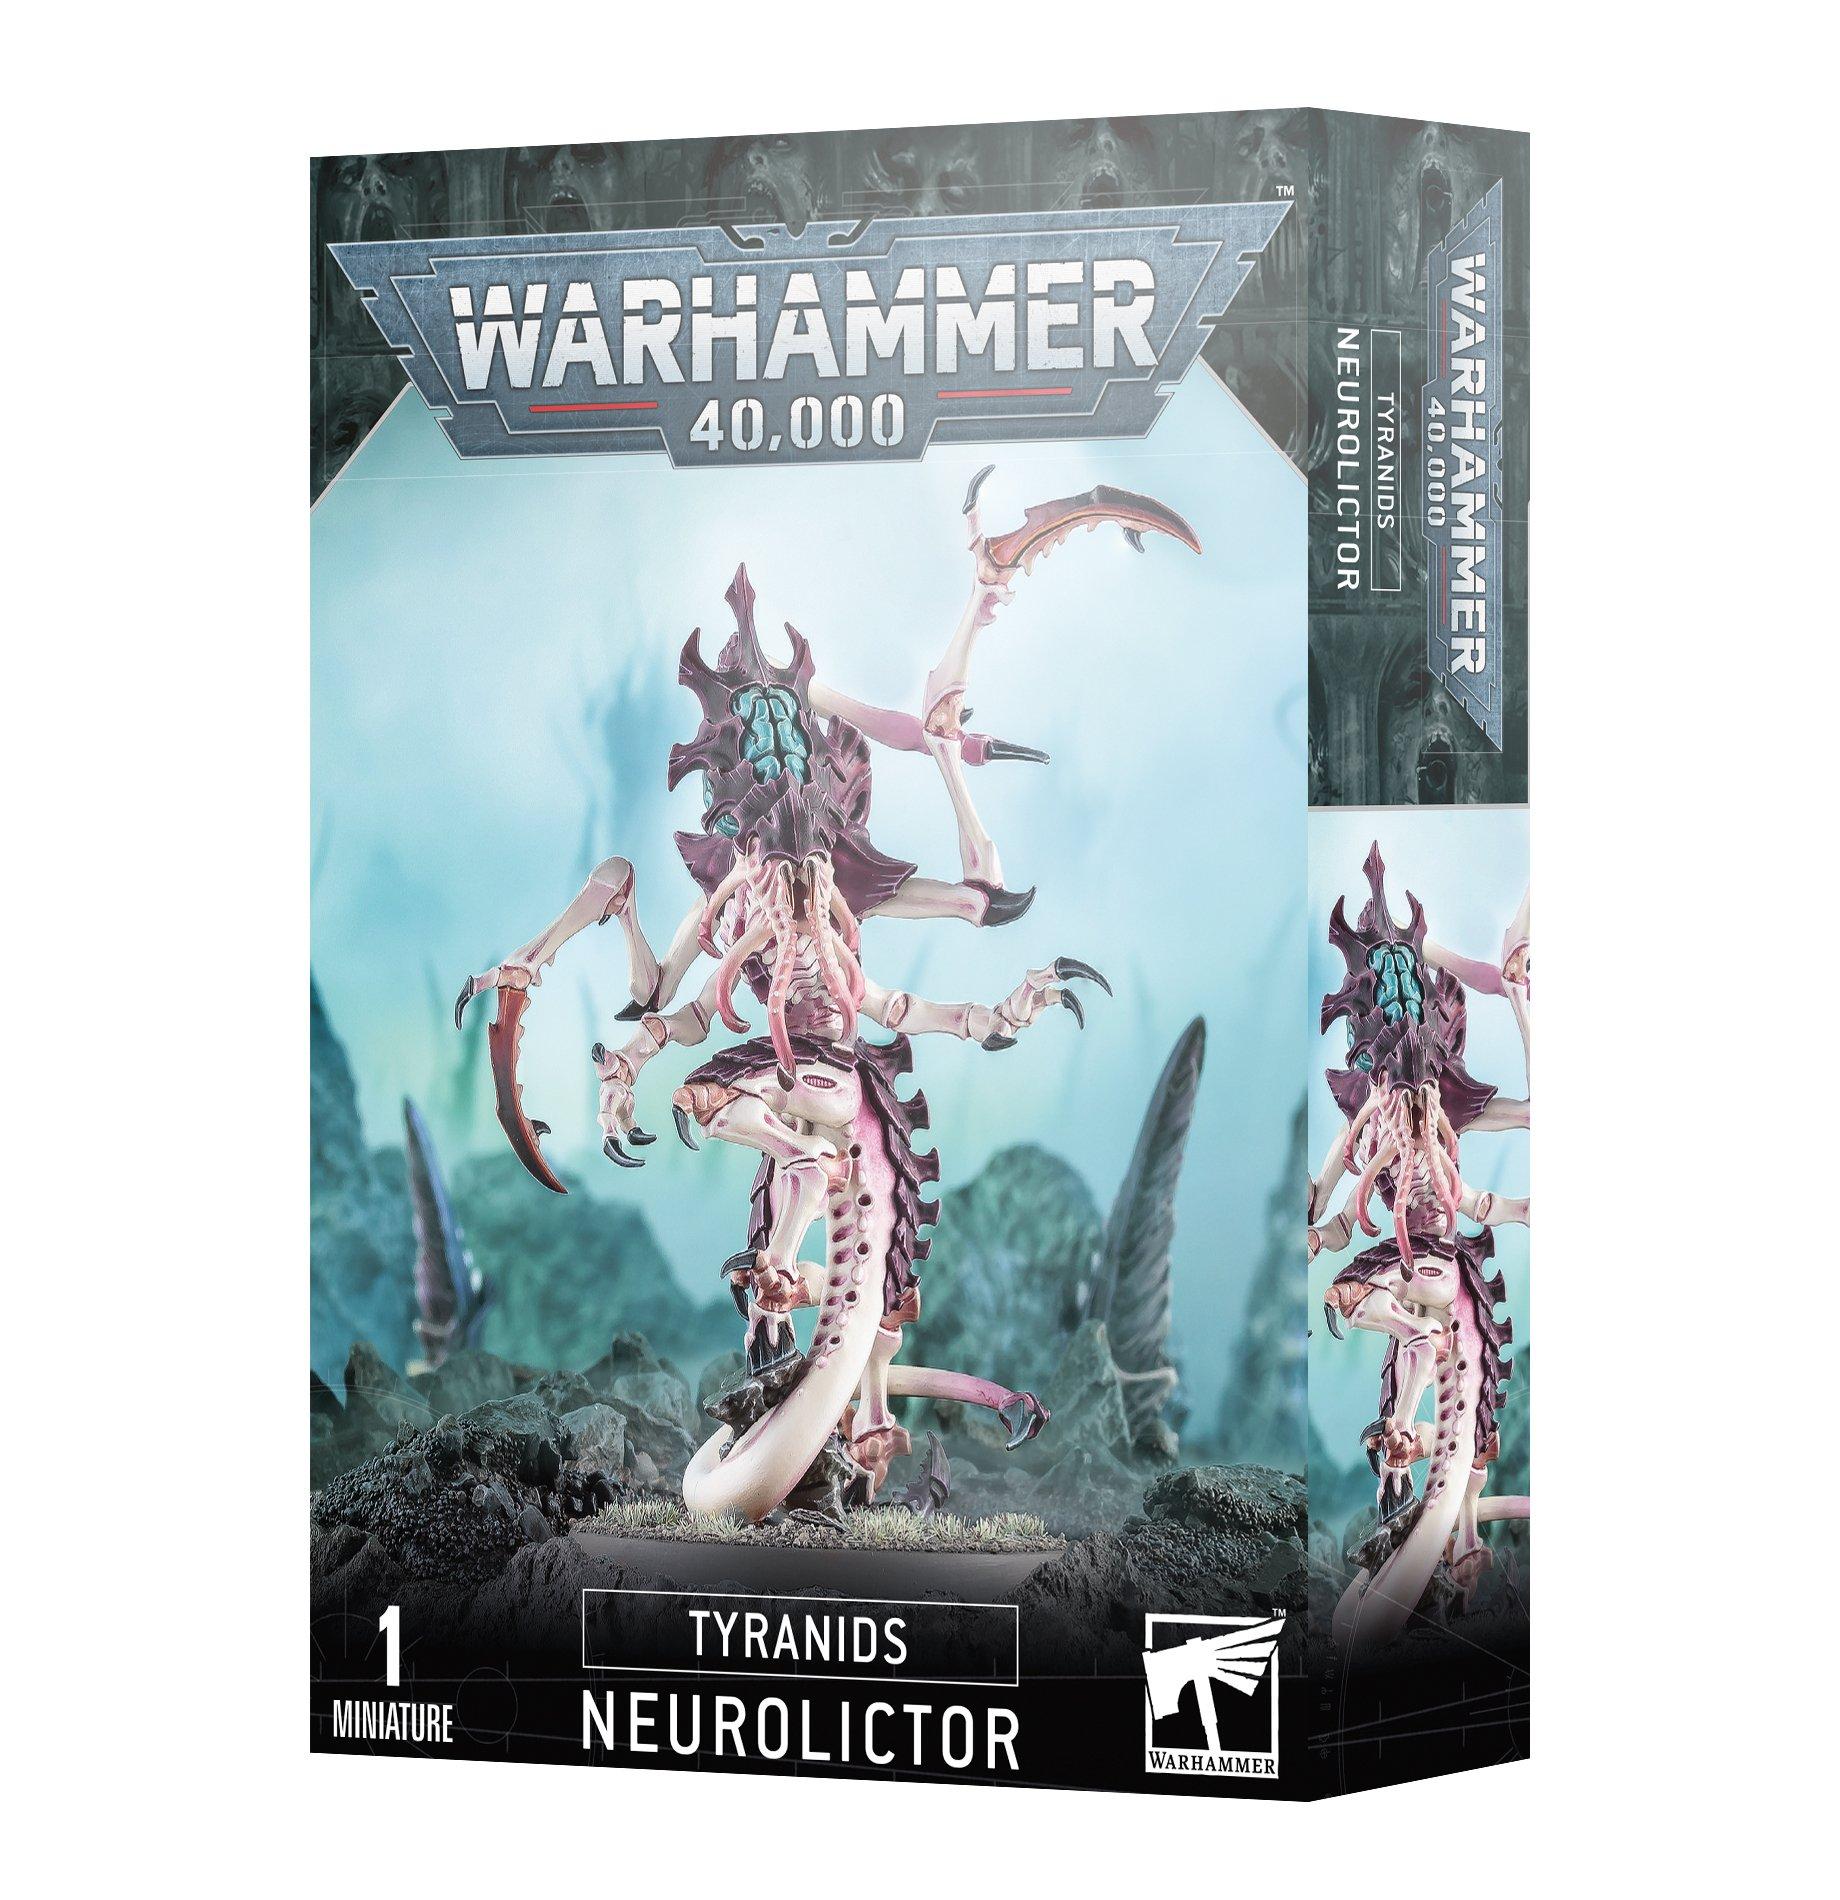 Warhammer 40,000 - Tyranids: Neurolictor